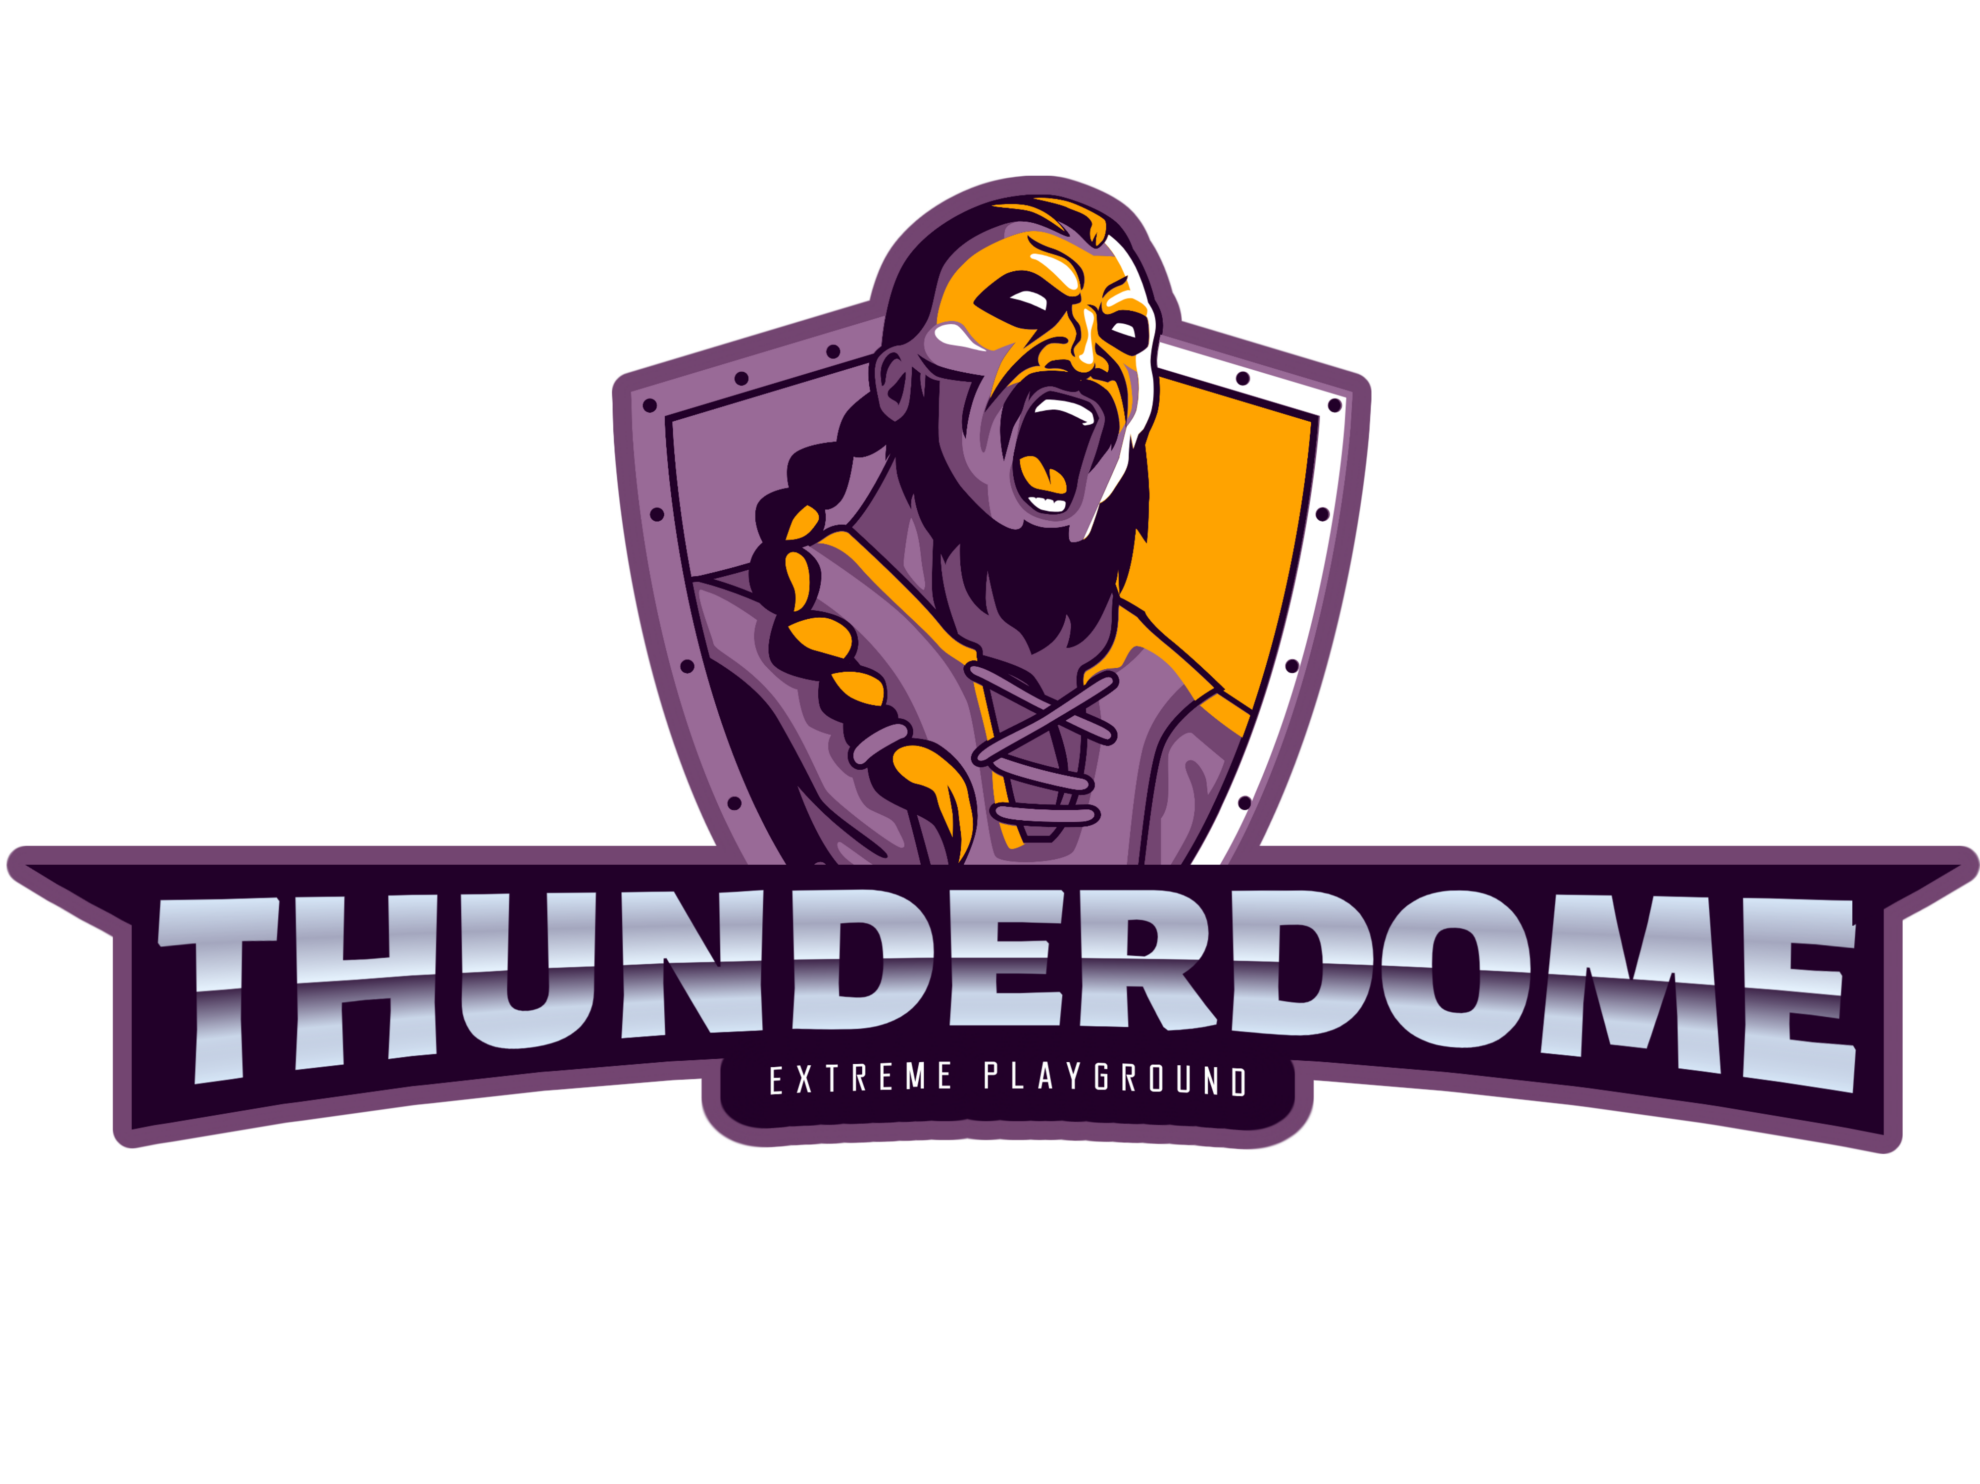 Thunderdome's Image